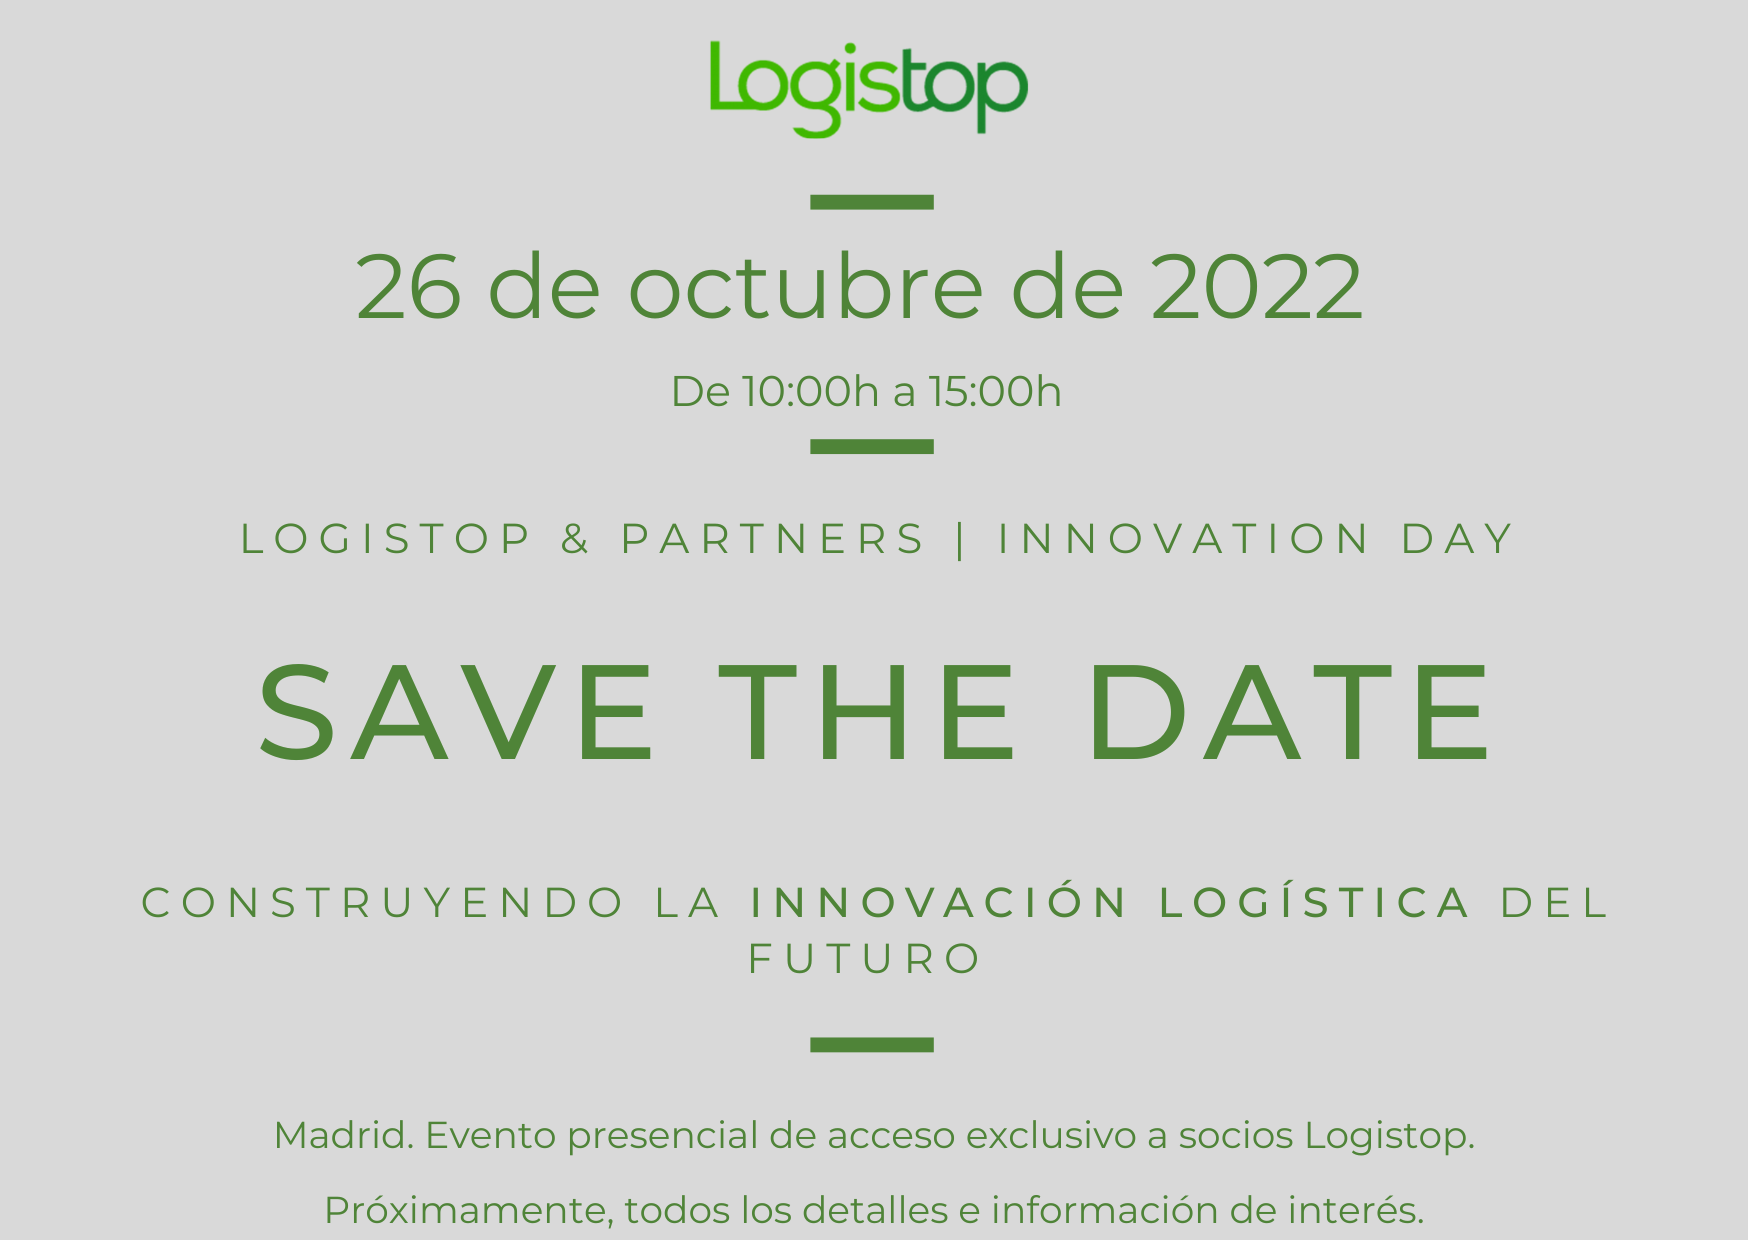 Logistop & Partners | Innovation Day